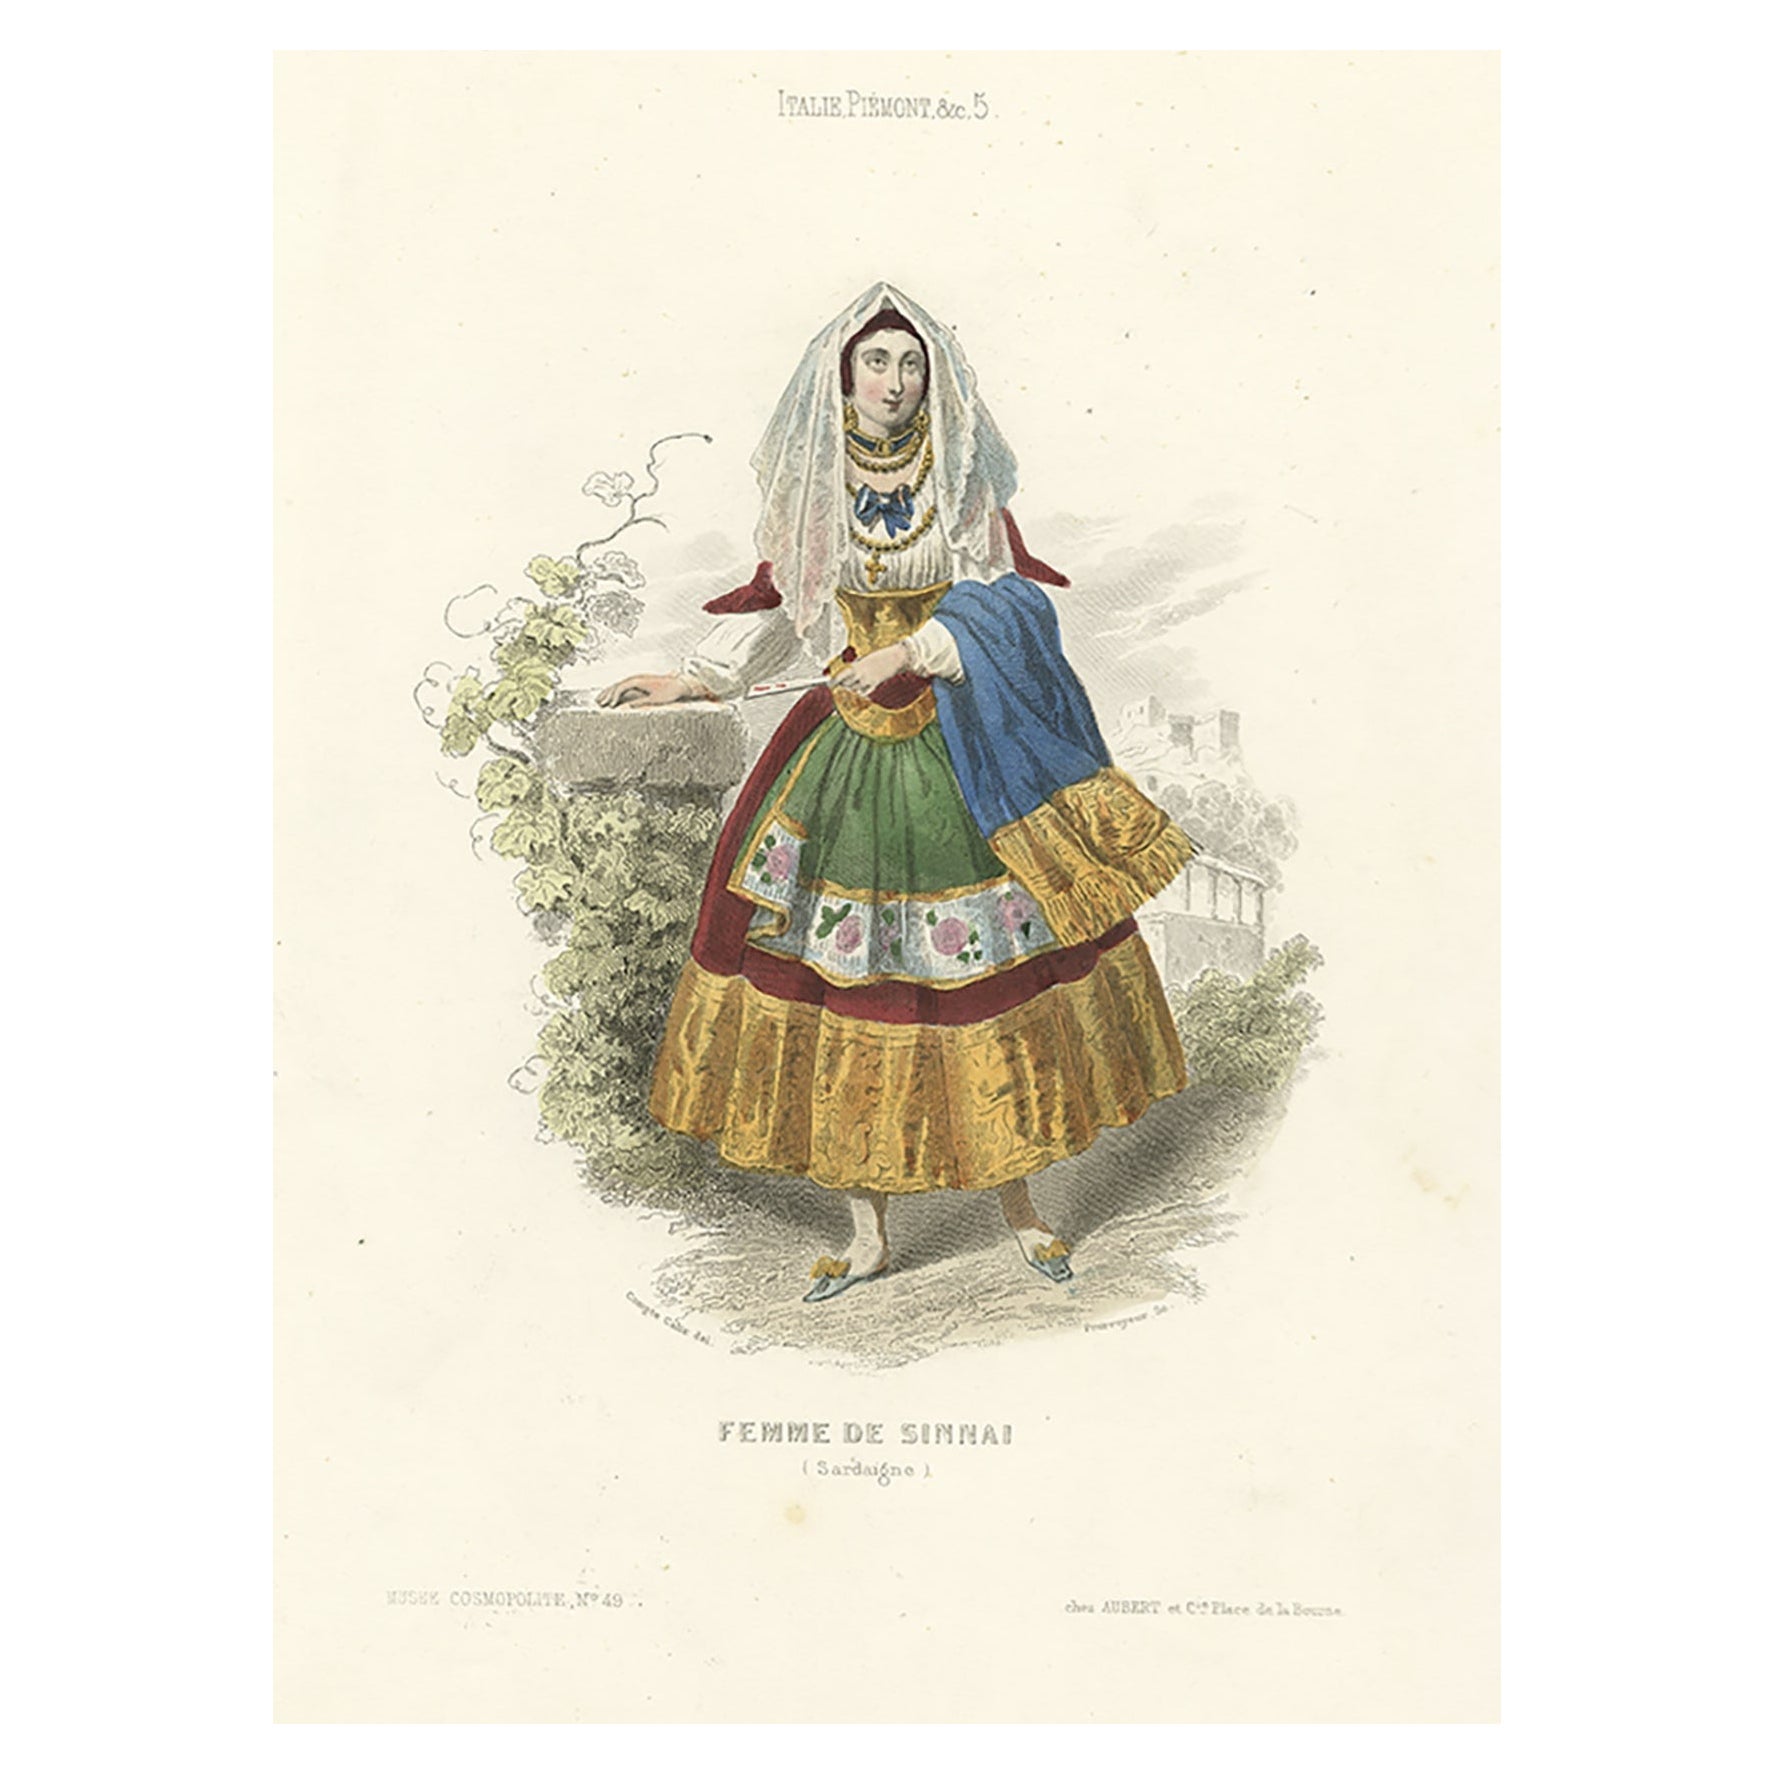 Antique Print of a Lady from Sinnai, Cagliari 'region of Sardinia', Italy, 1850